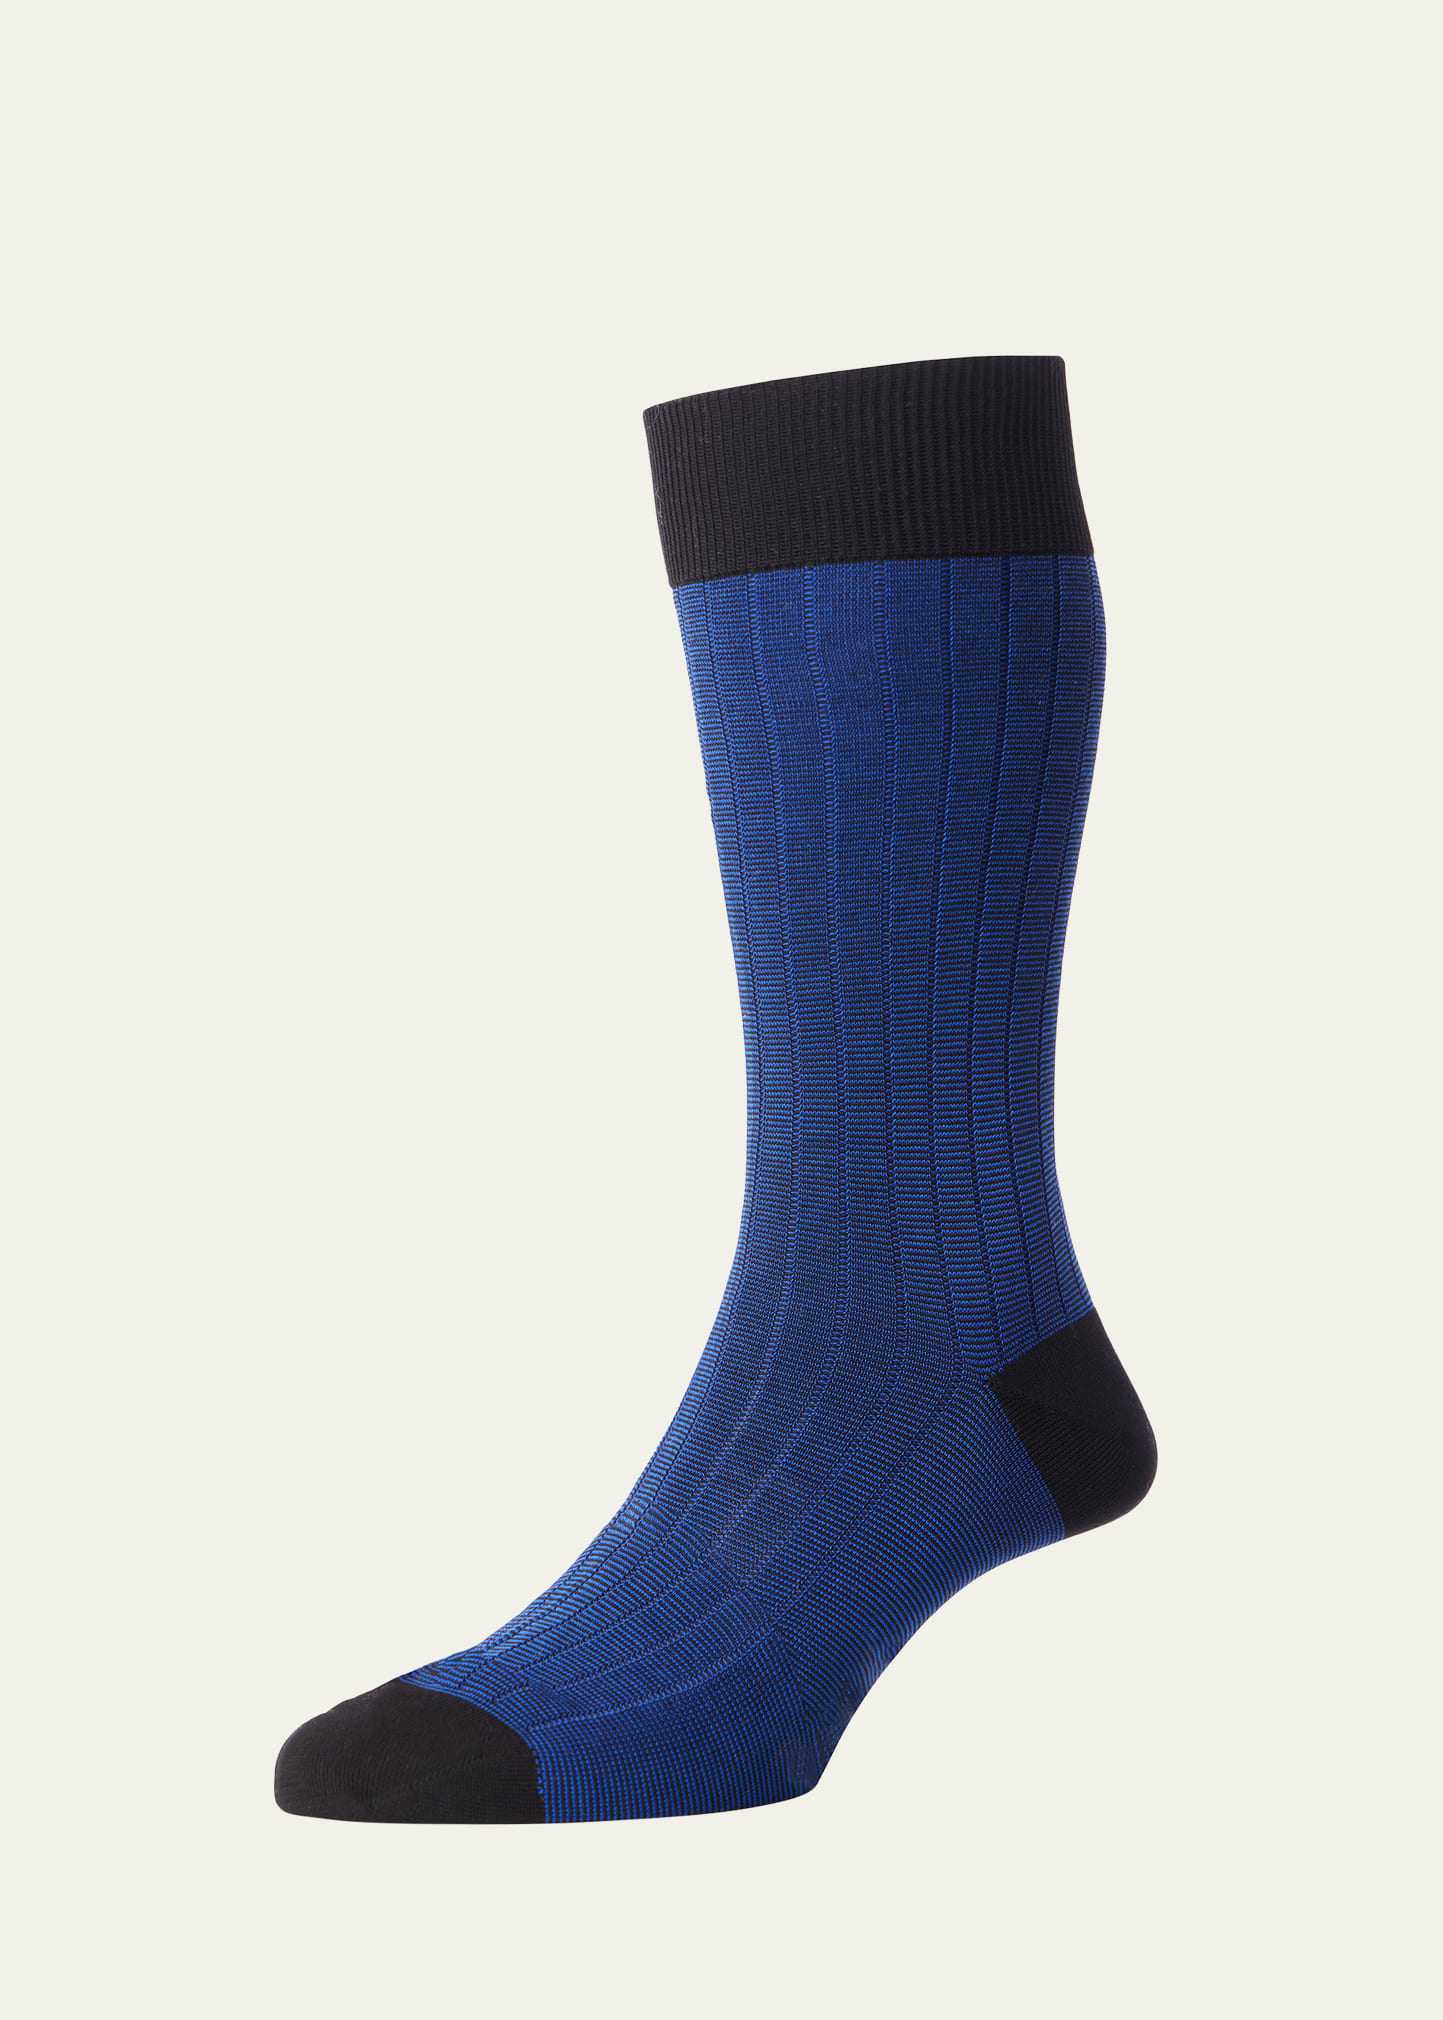 Asberley Silk Men's Socks by Pantherella